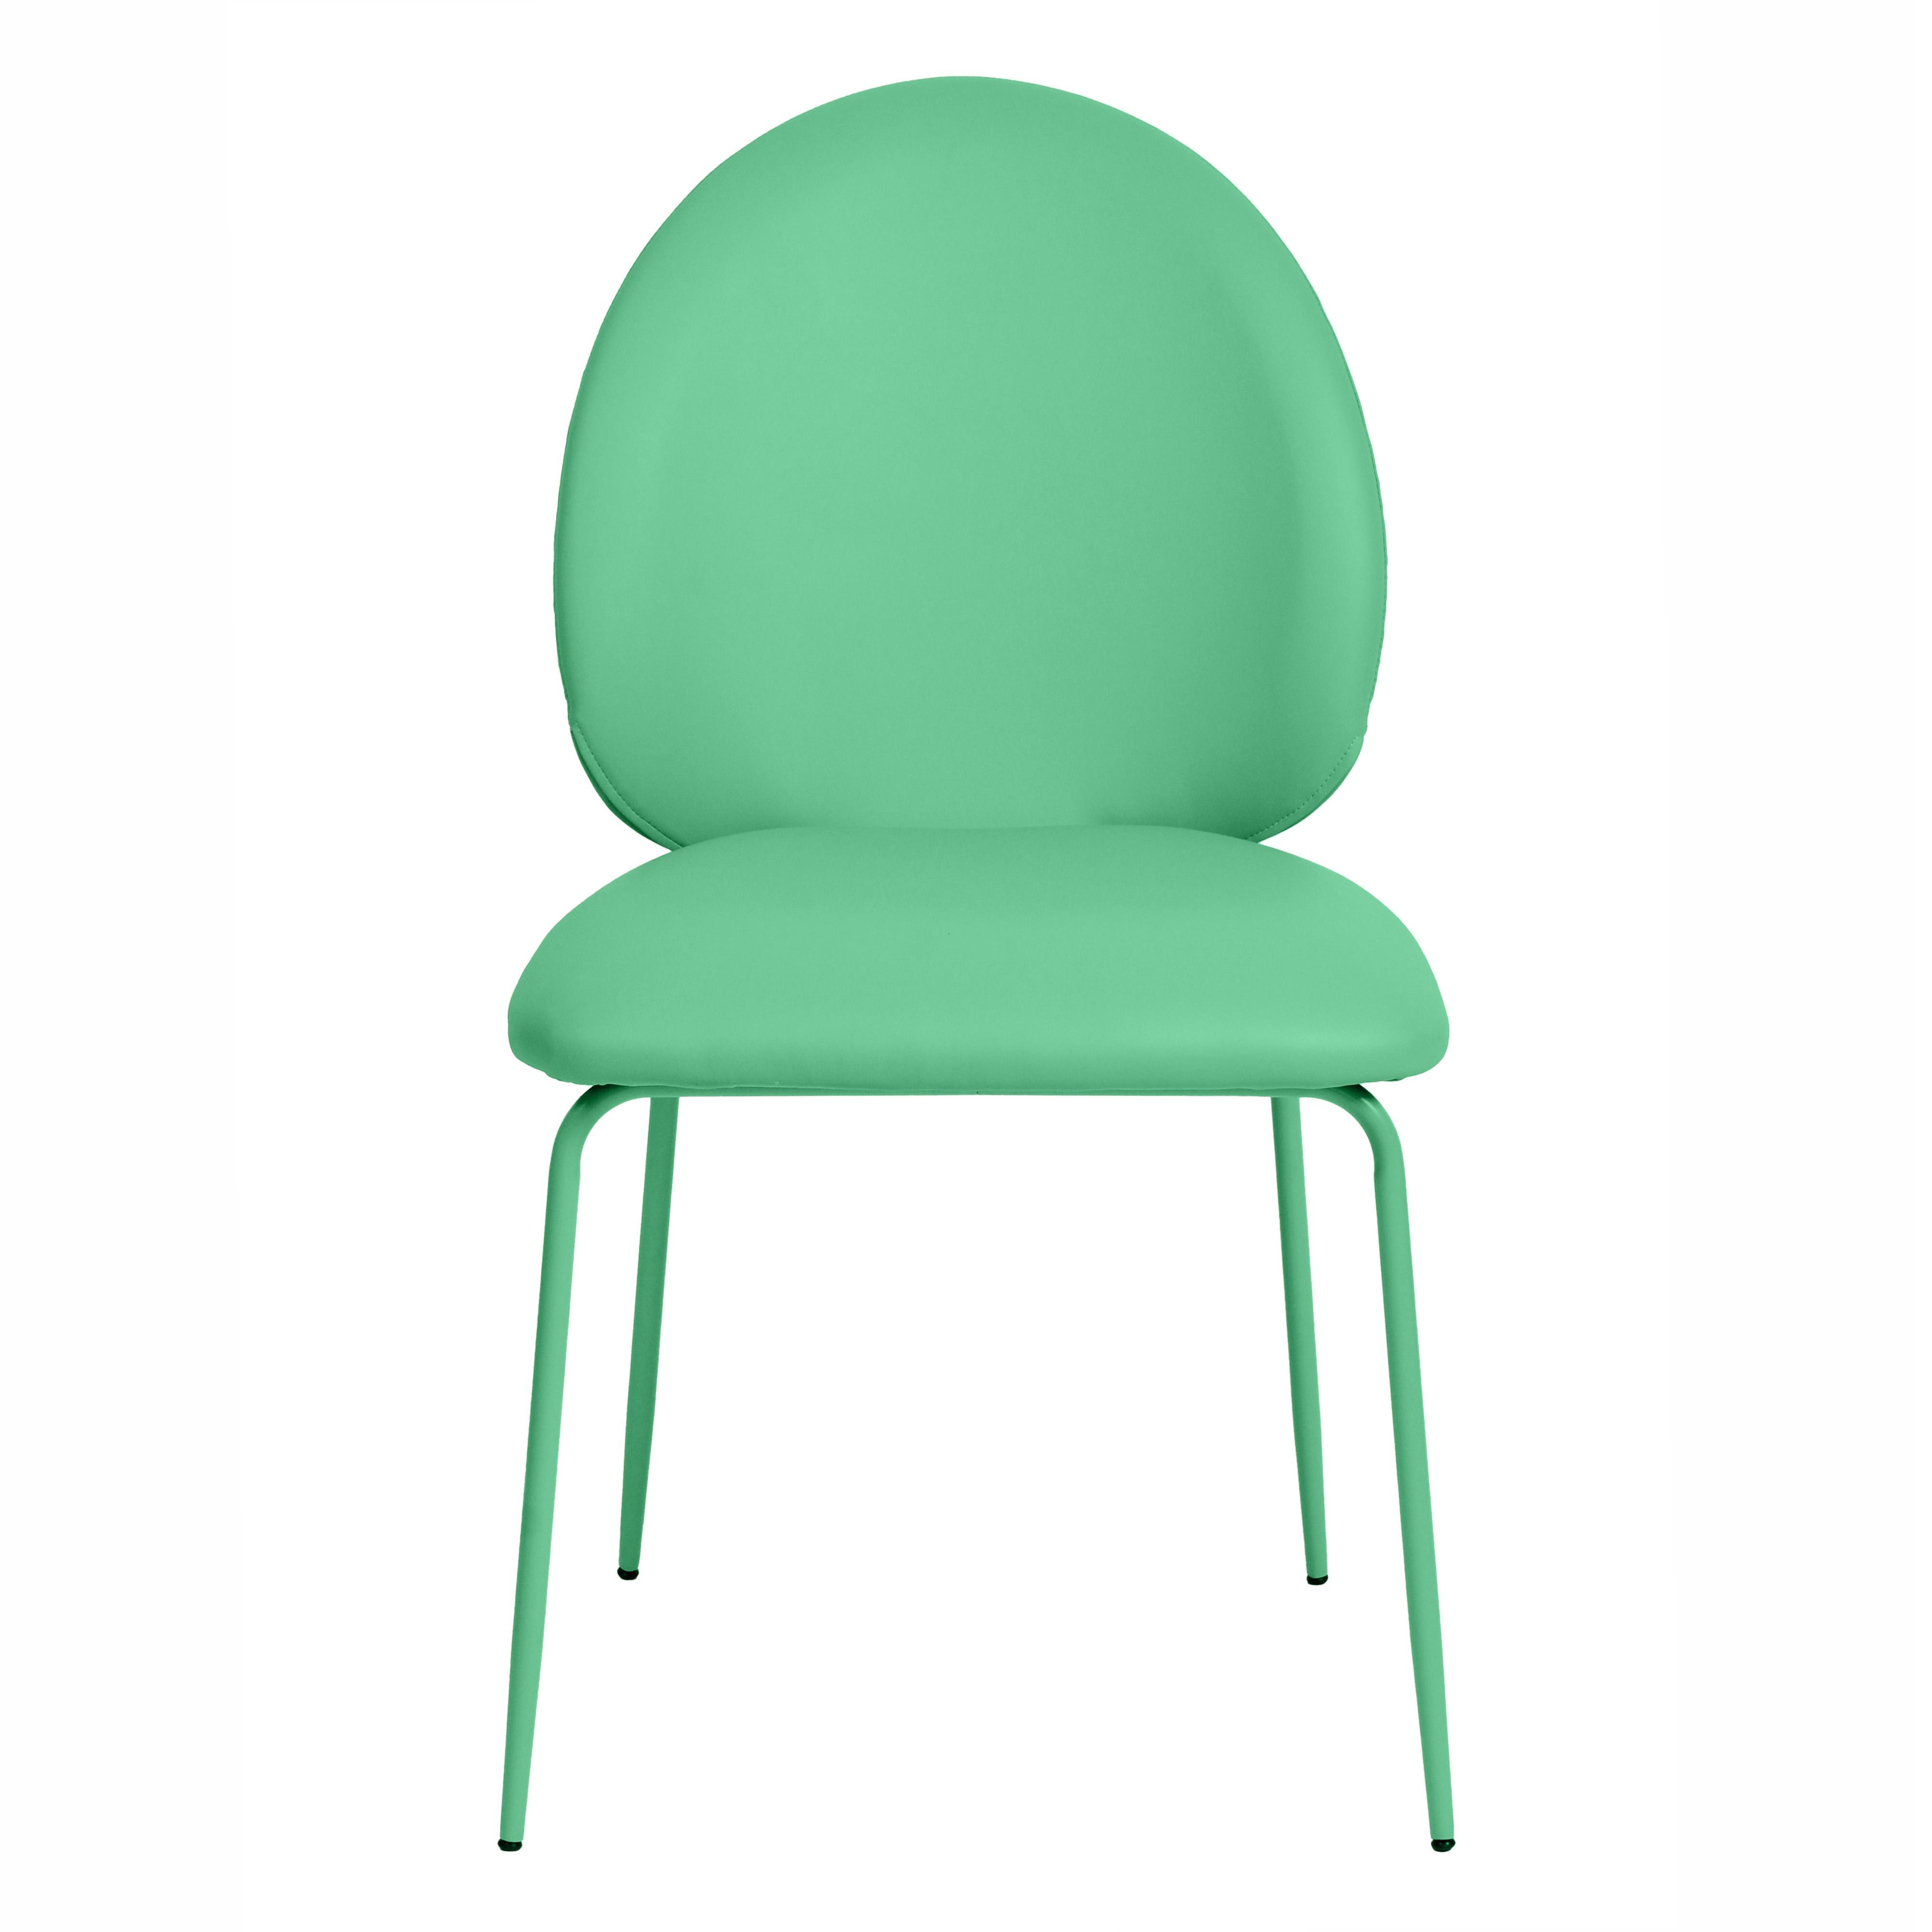 Lauren Green Vegan Leather Kitchen Chairs - Set of 2 - Image 1